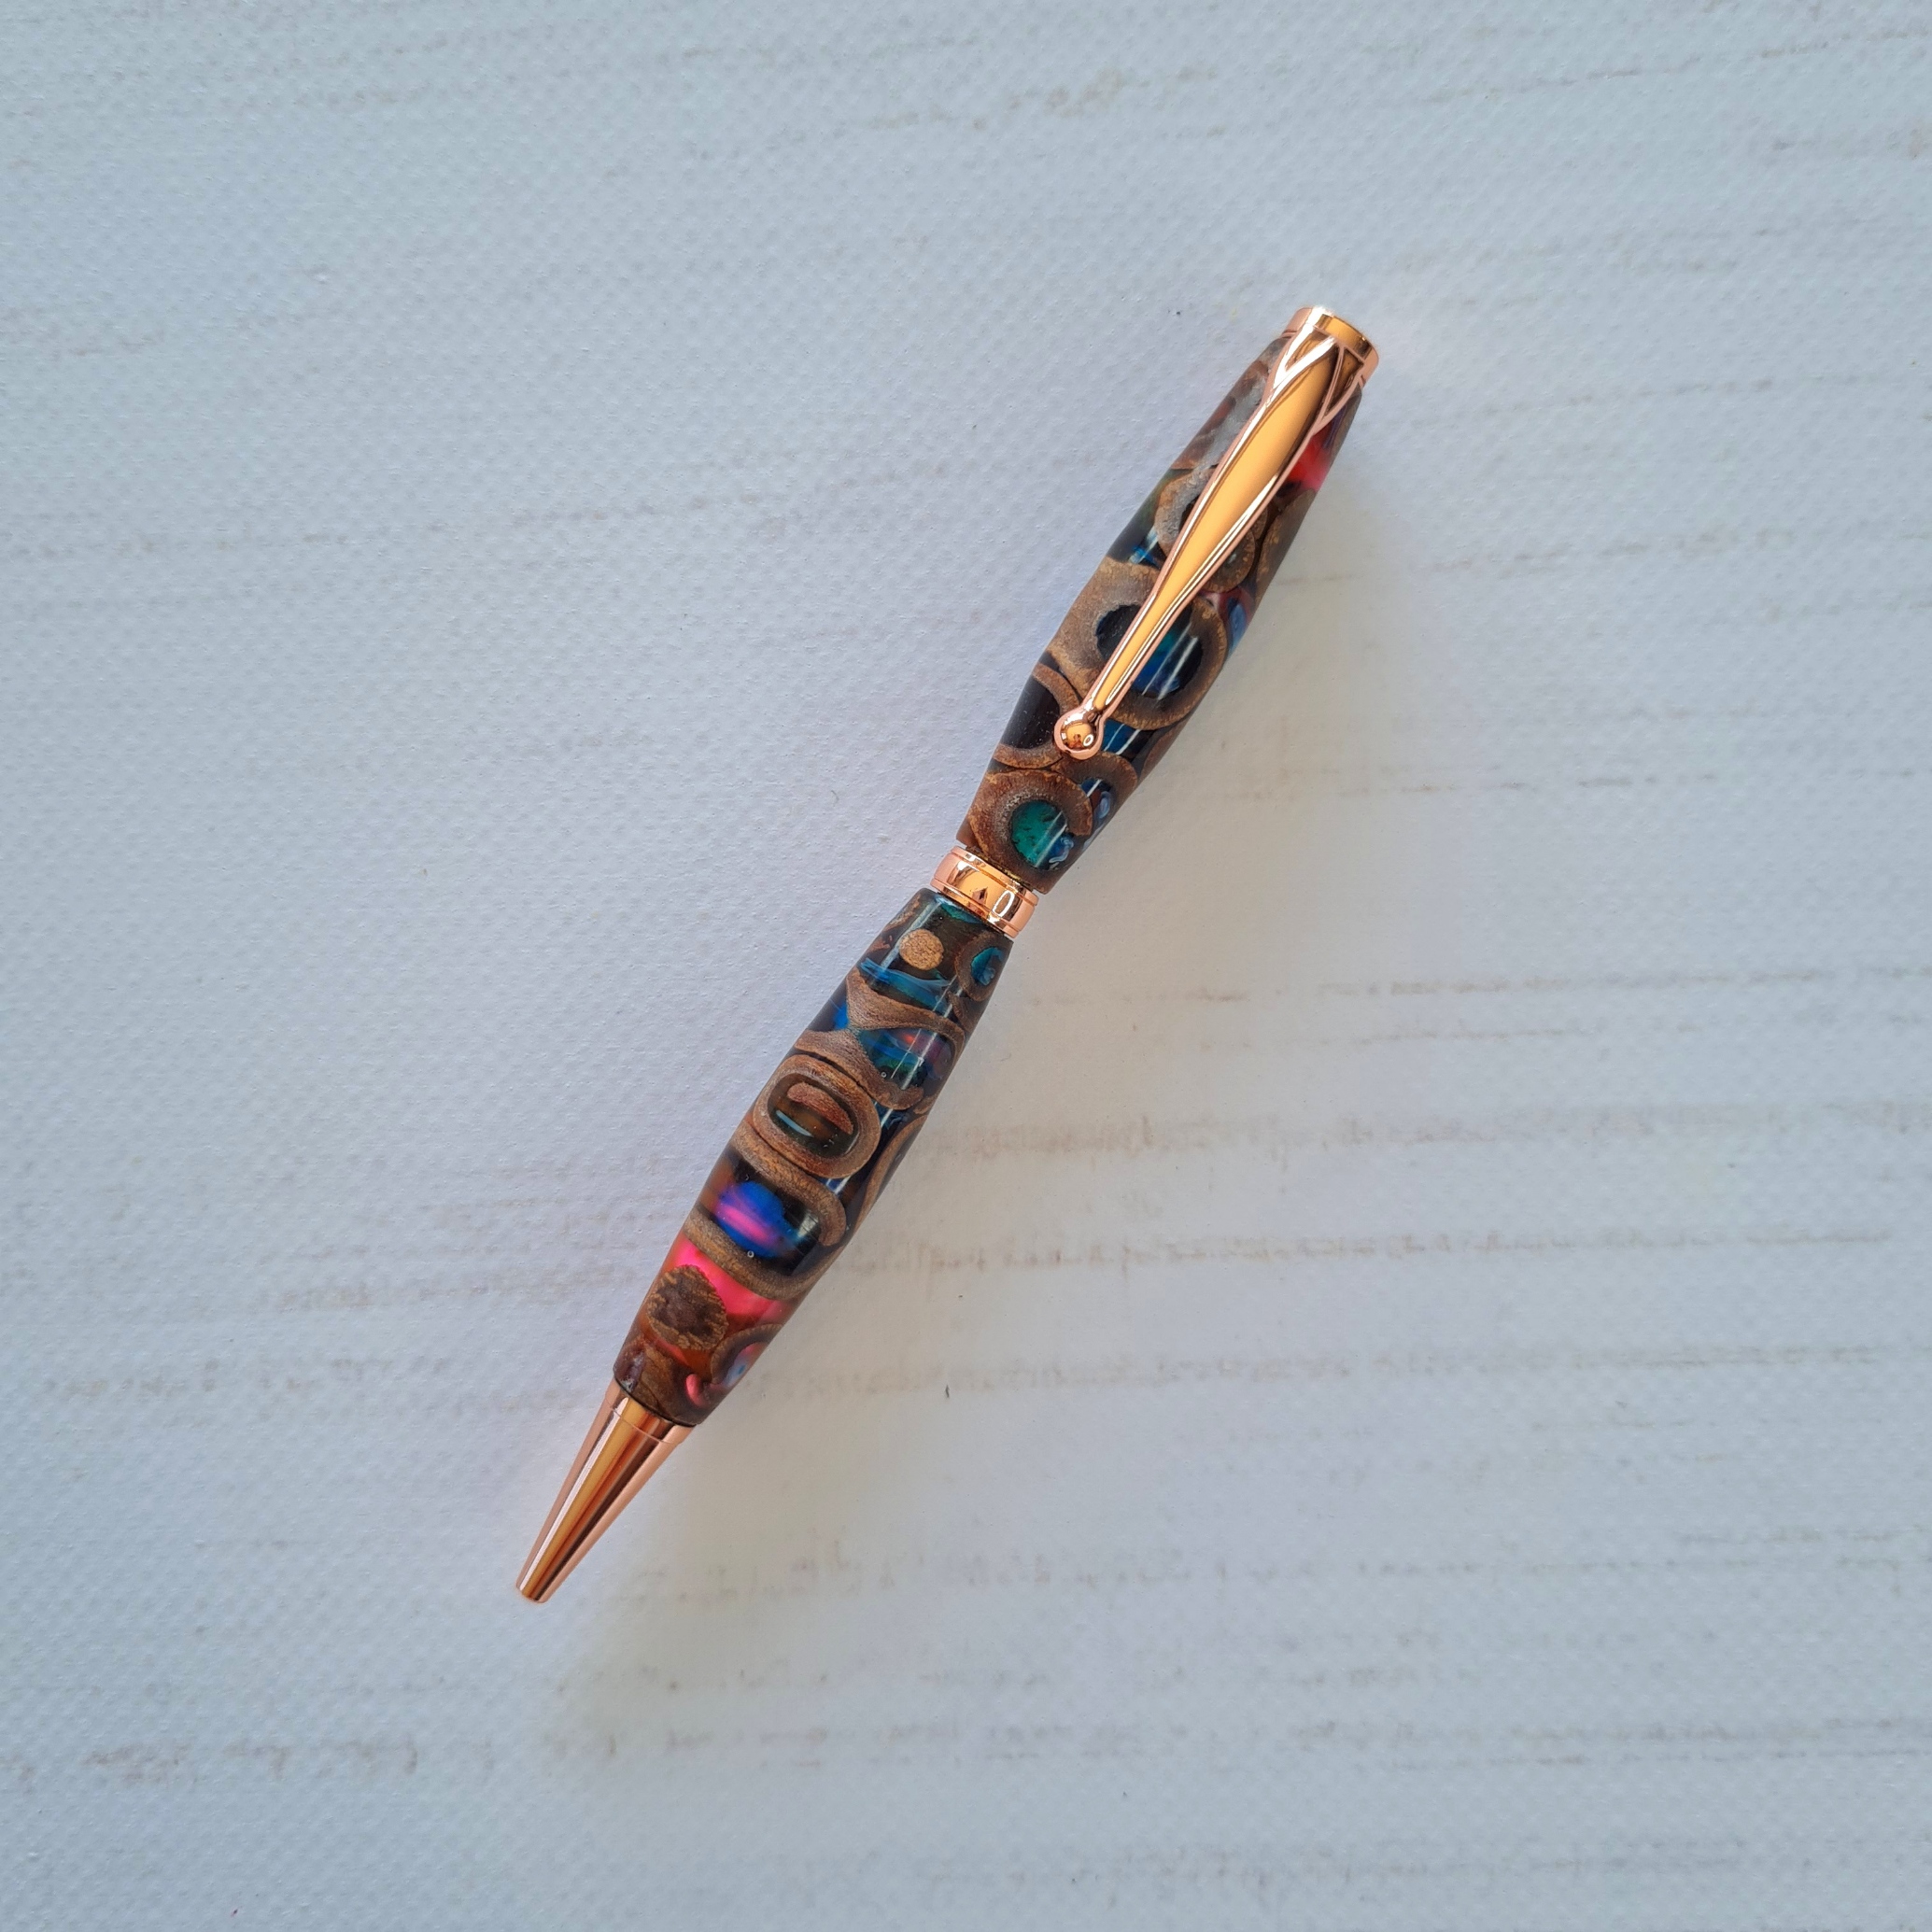 stylo bille cannelle rechargeable fait main (1)